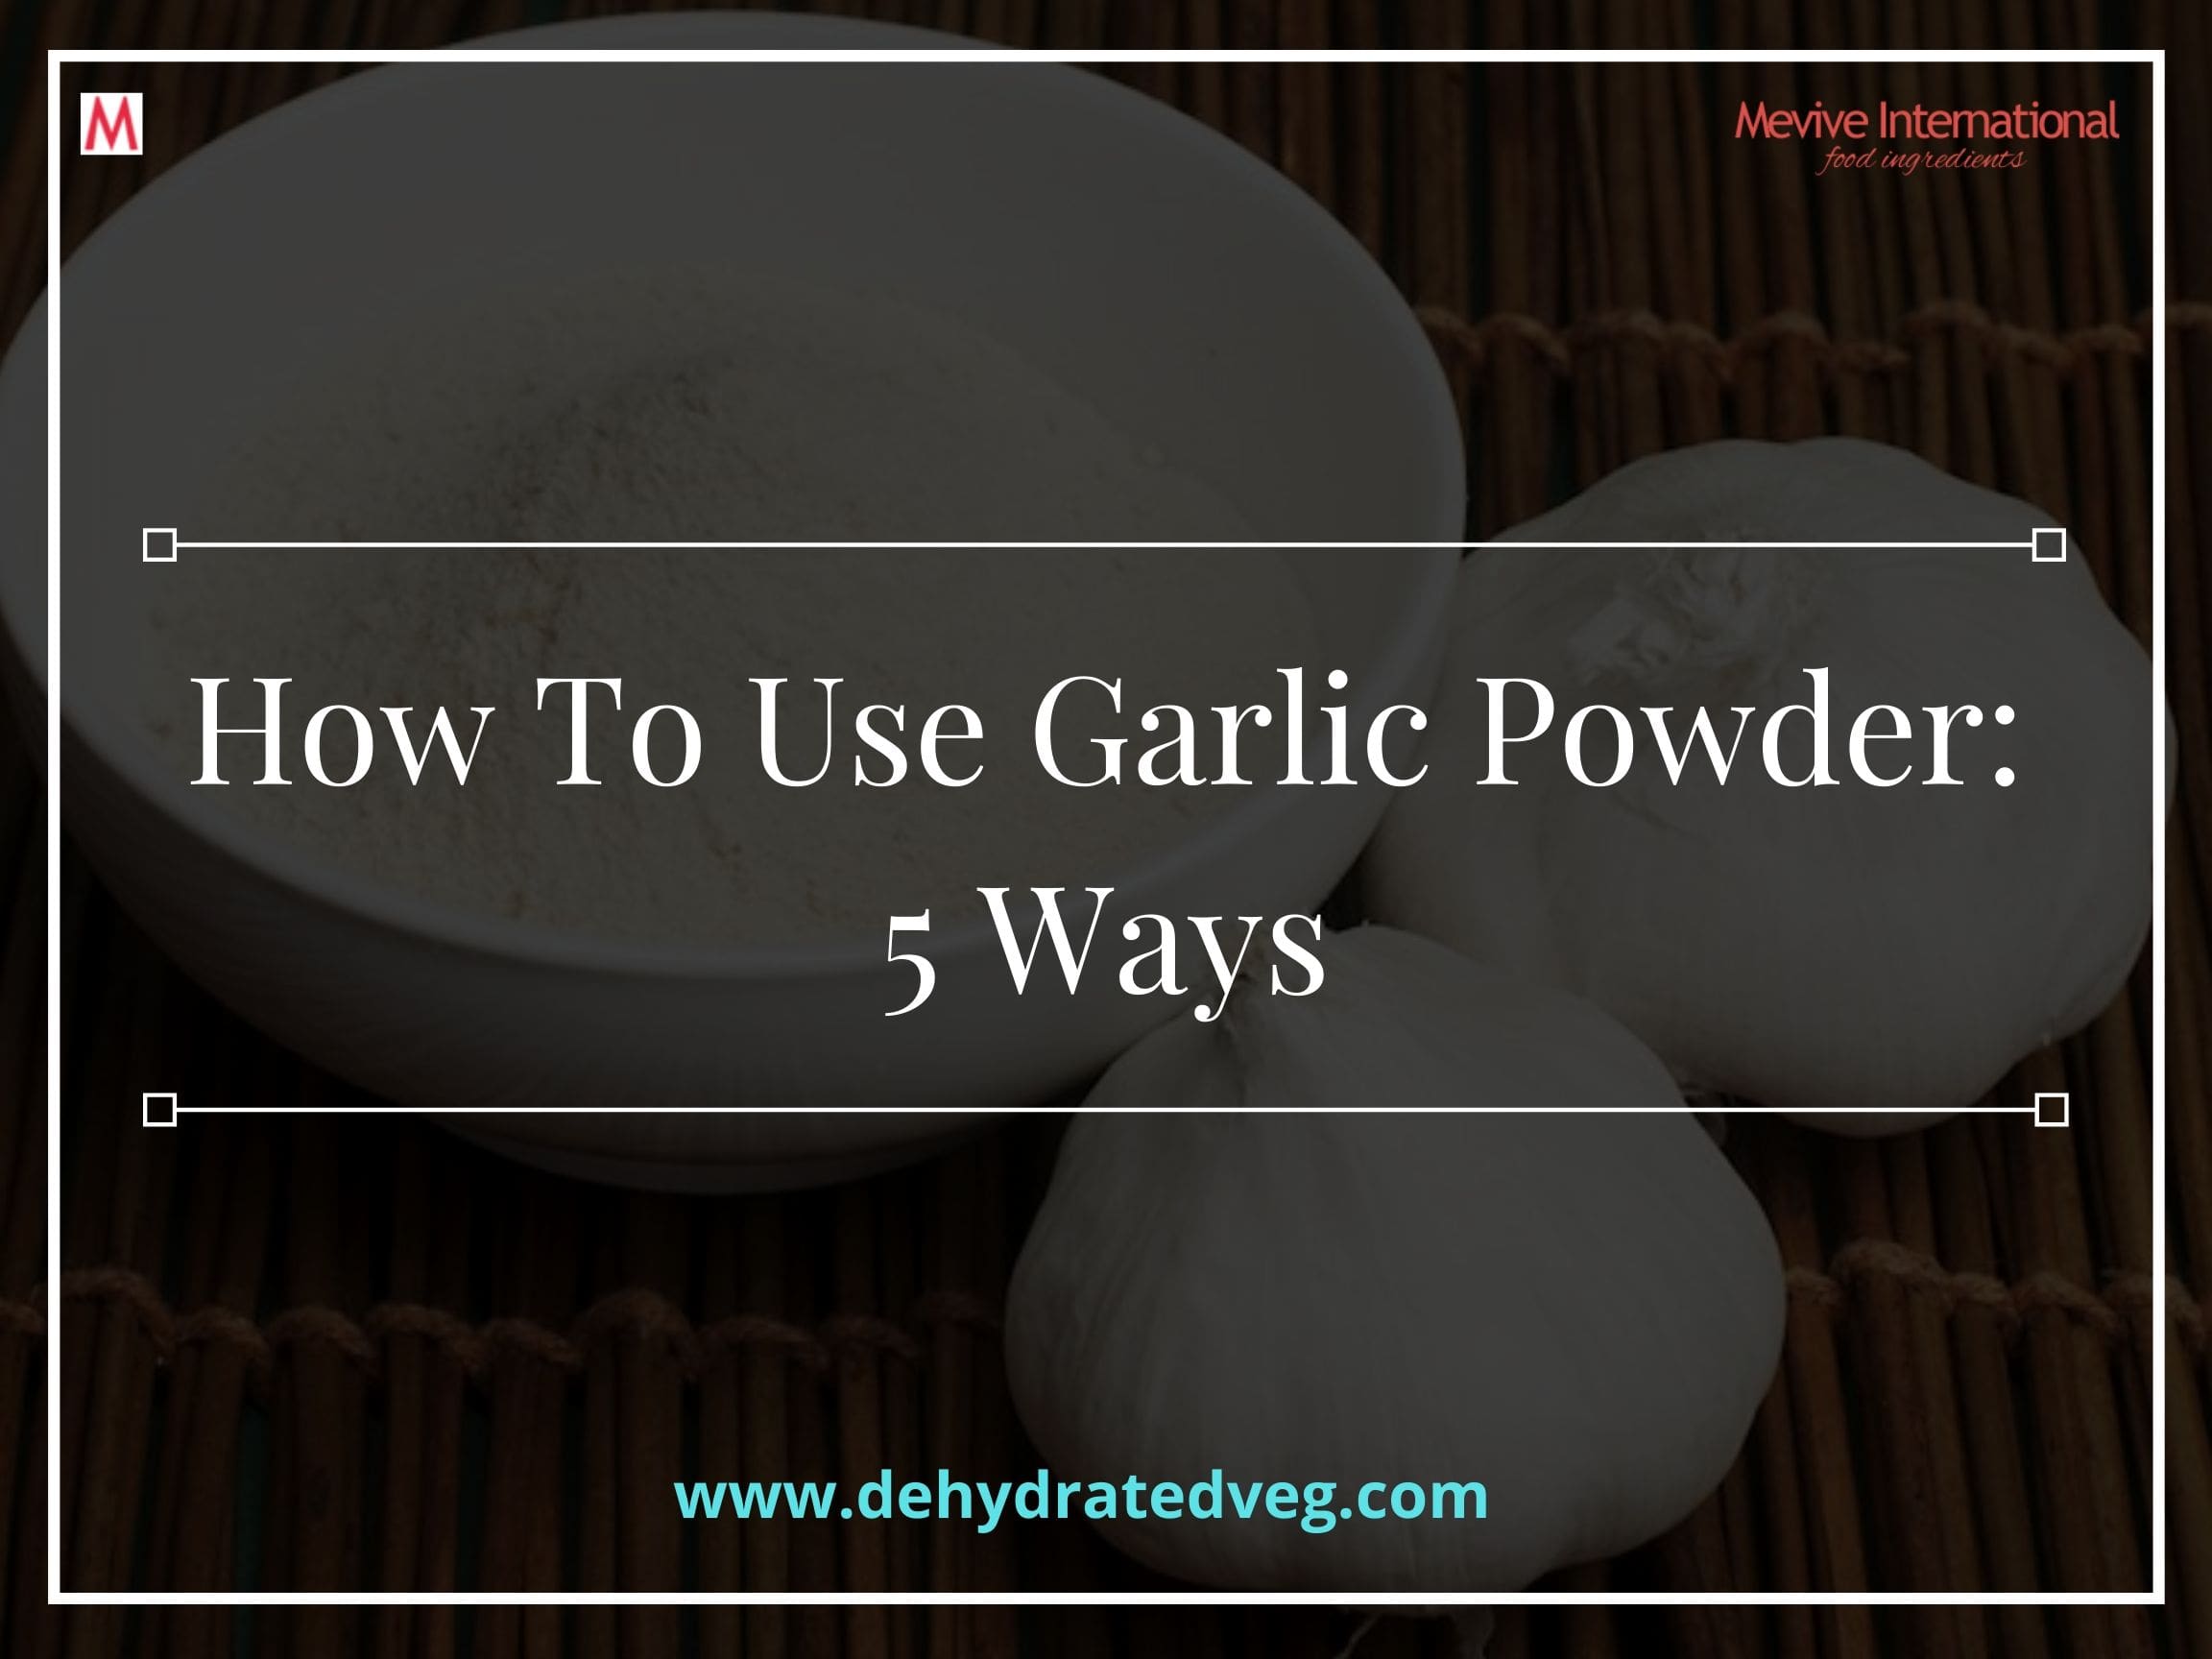 https://www.dehydratedveg.com/blog/blog%20images/blog/how-to-use-garlic-powder-5-ways-mevive-international.jpg